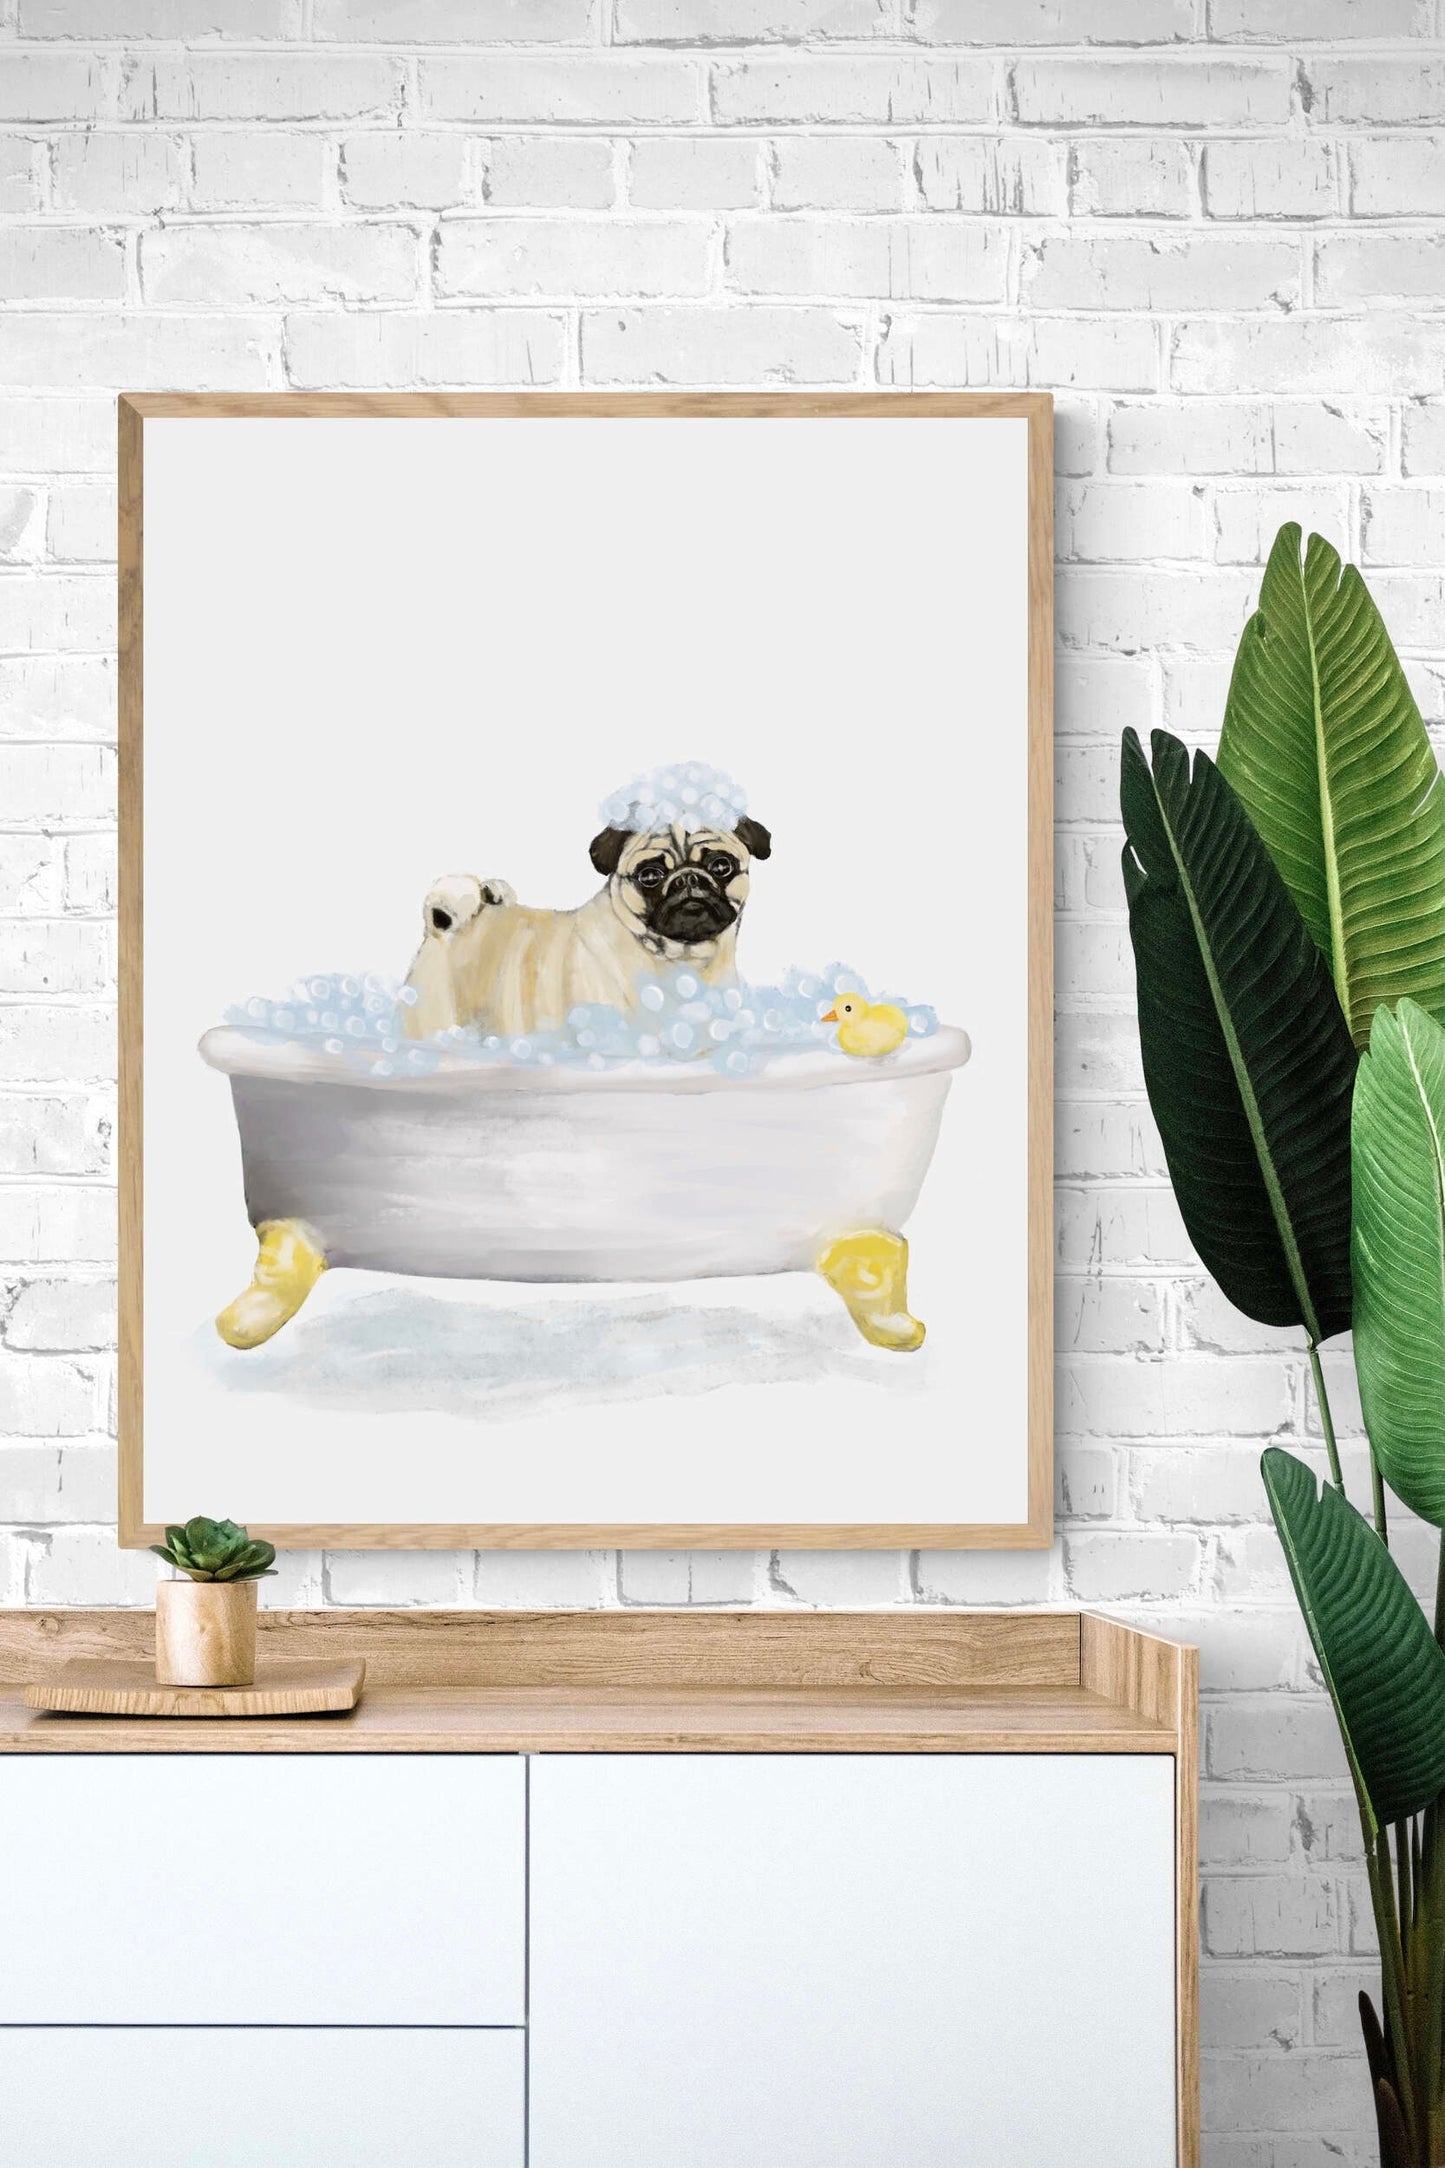 Set of 2 Pug In Bath Prints, Dog Sitting on Toilet Print, Bathroom Art, Bathroom Dog Painting, Dog Reading Newspaper Print, Pug Lover Gift